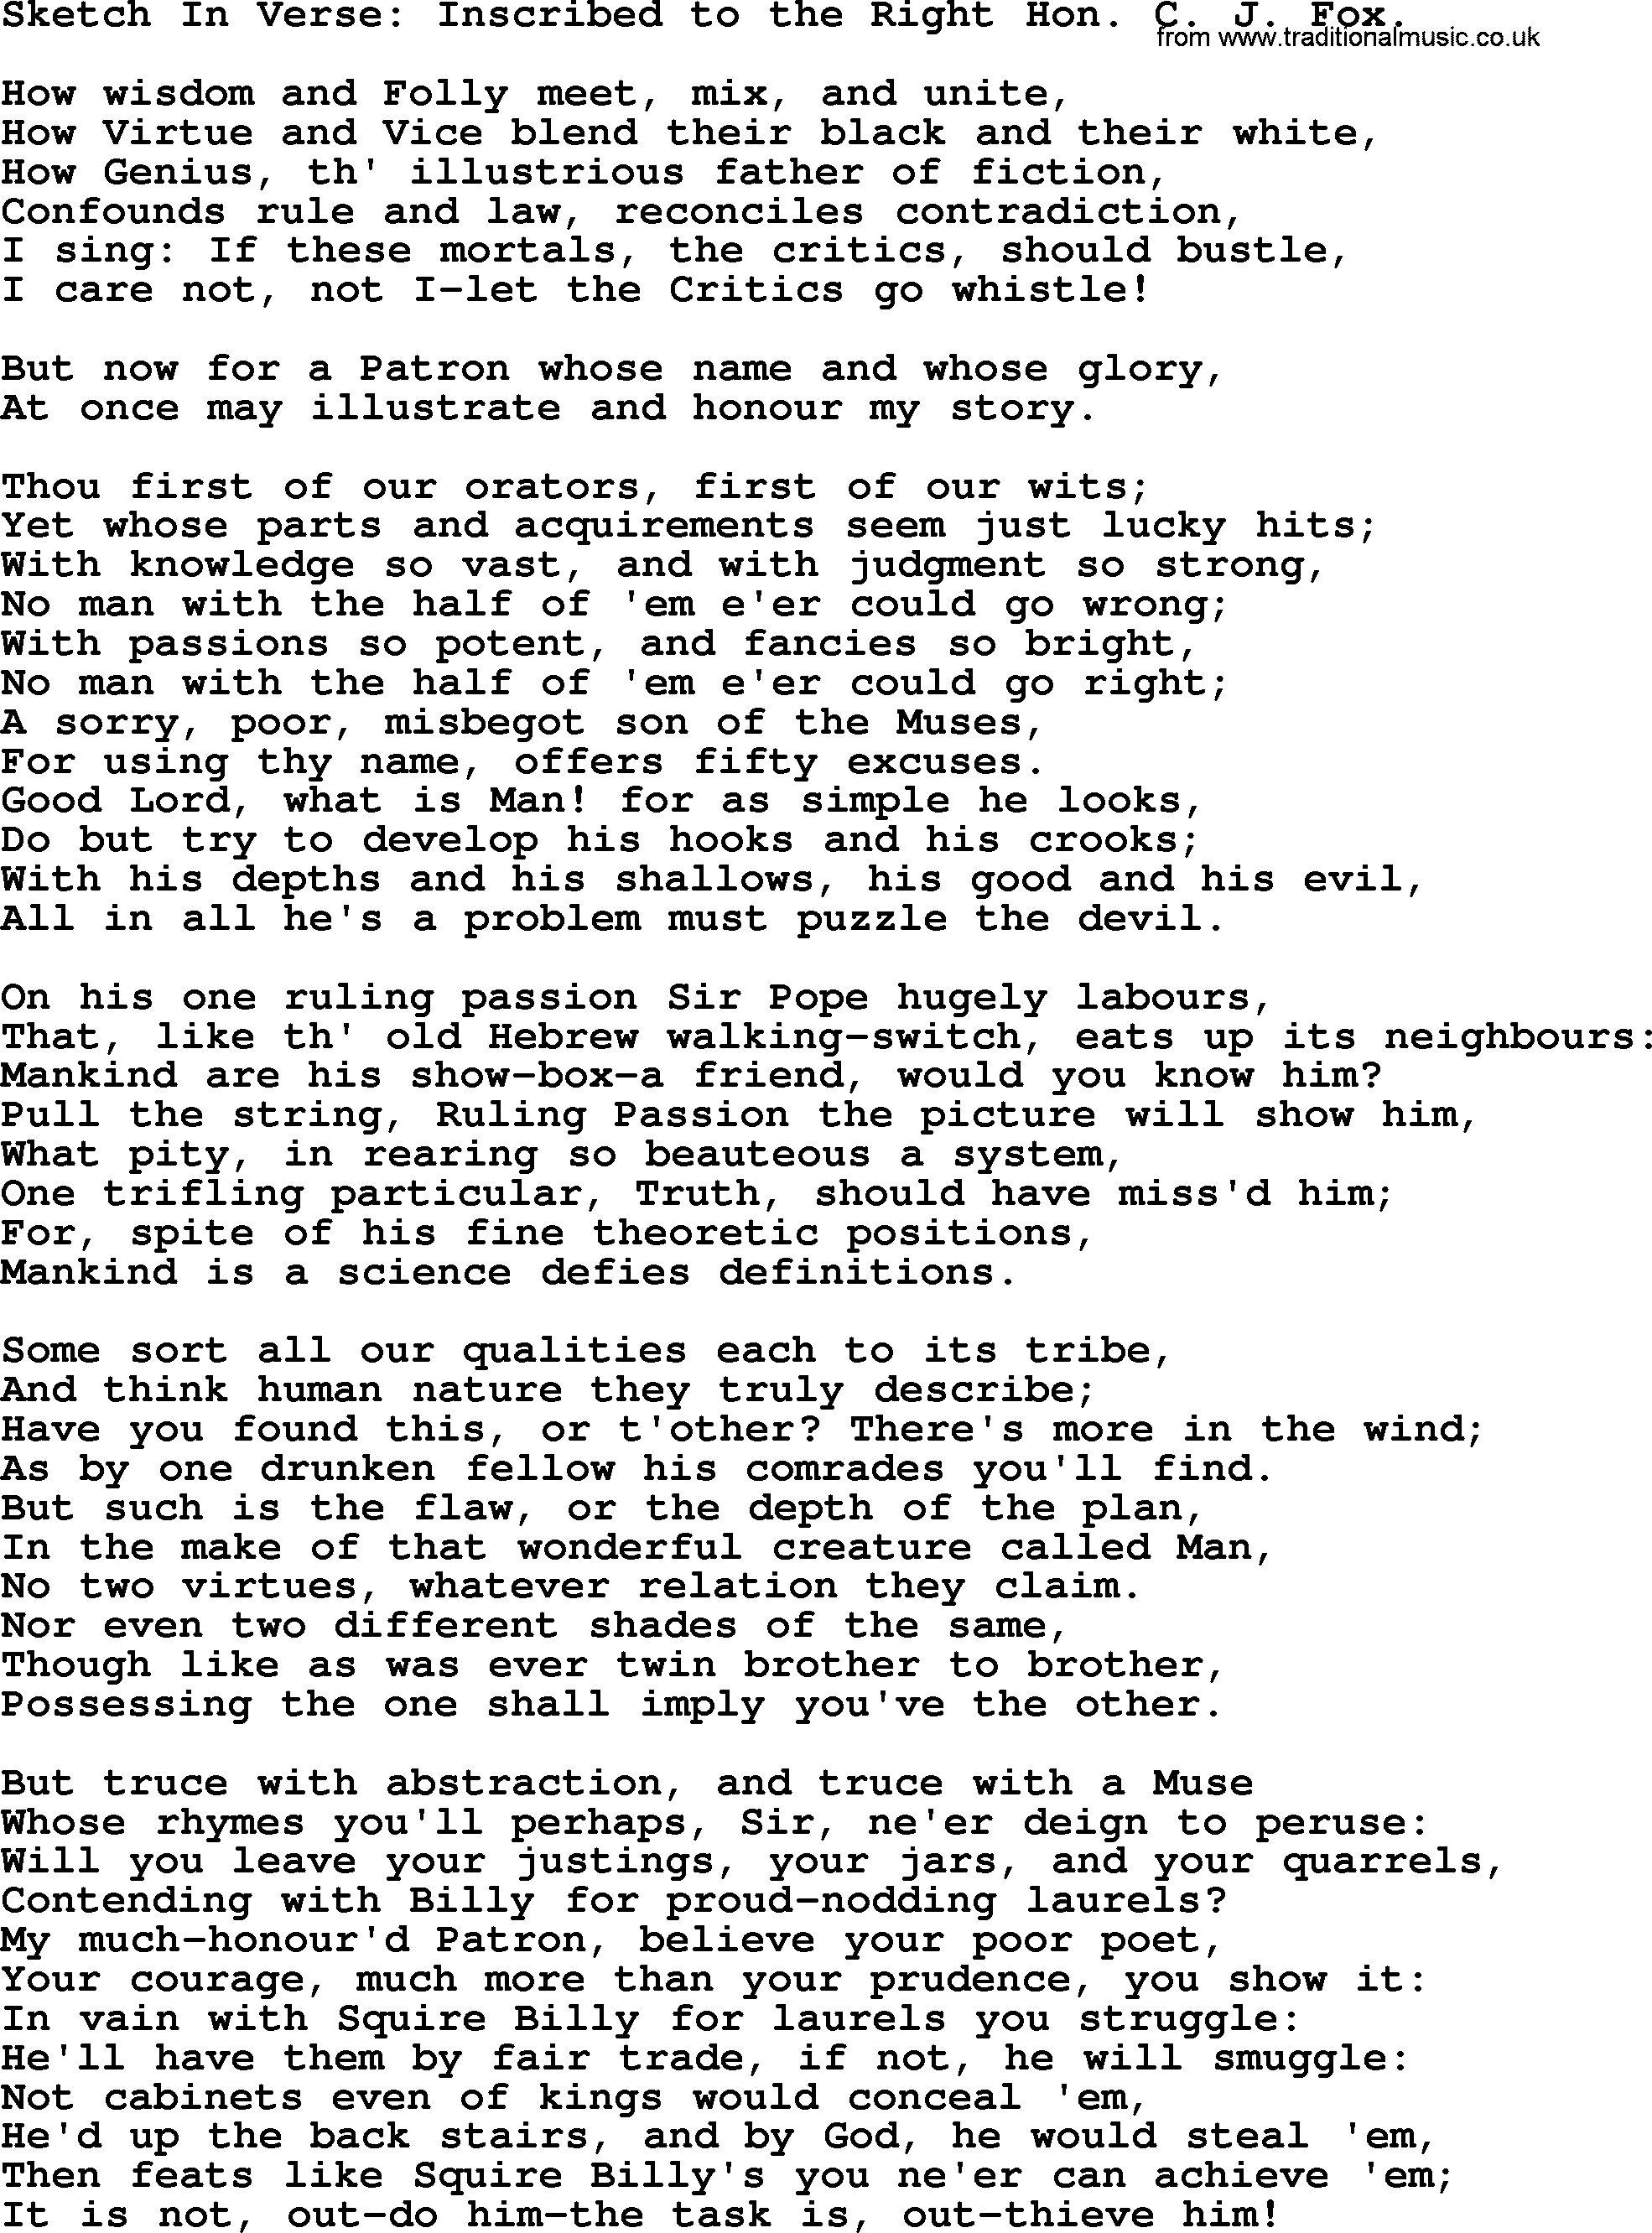 Robert Burns Songs & Lyrics: Sketch In Verse Inscribed To The Right Hon. C. J. Fox.